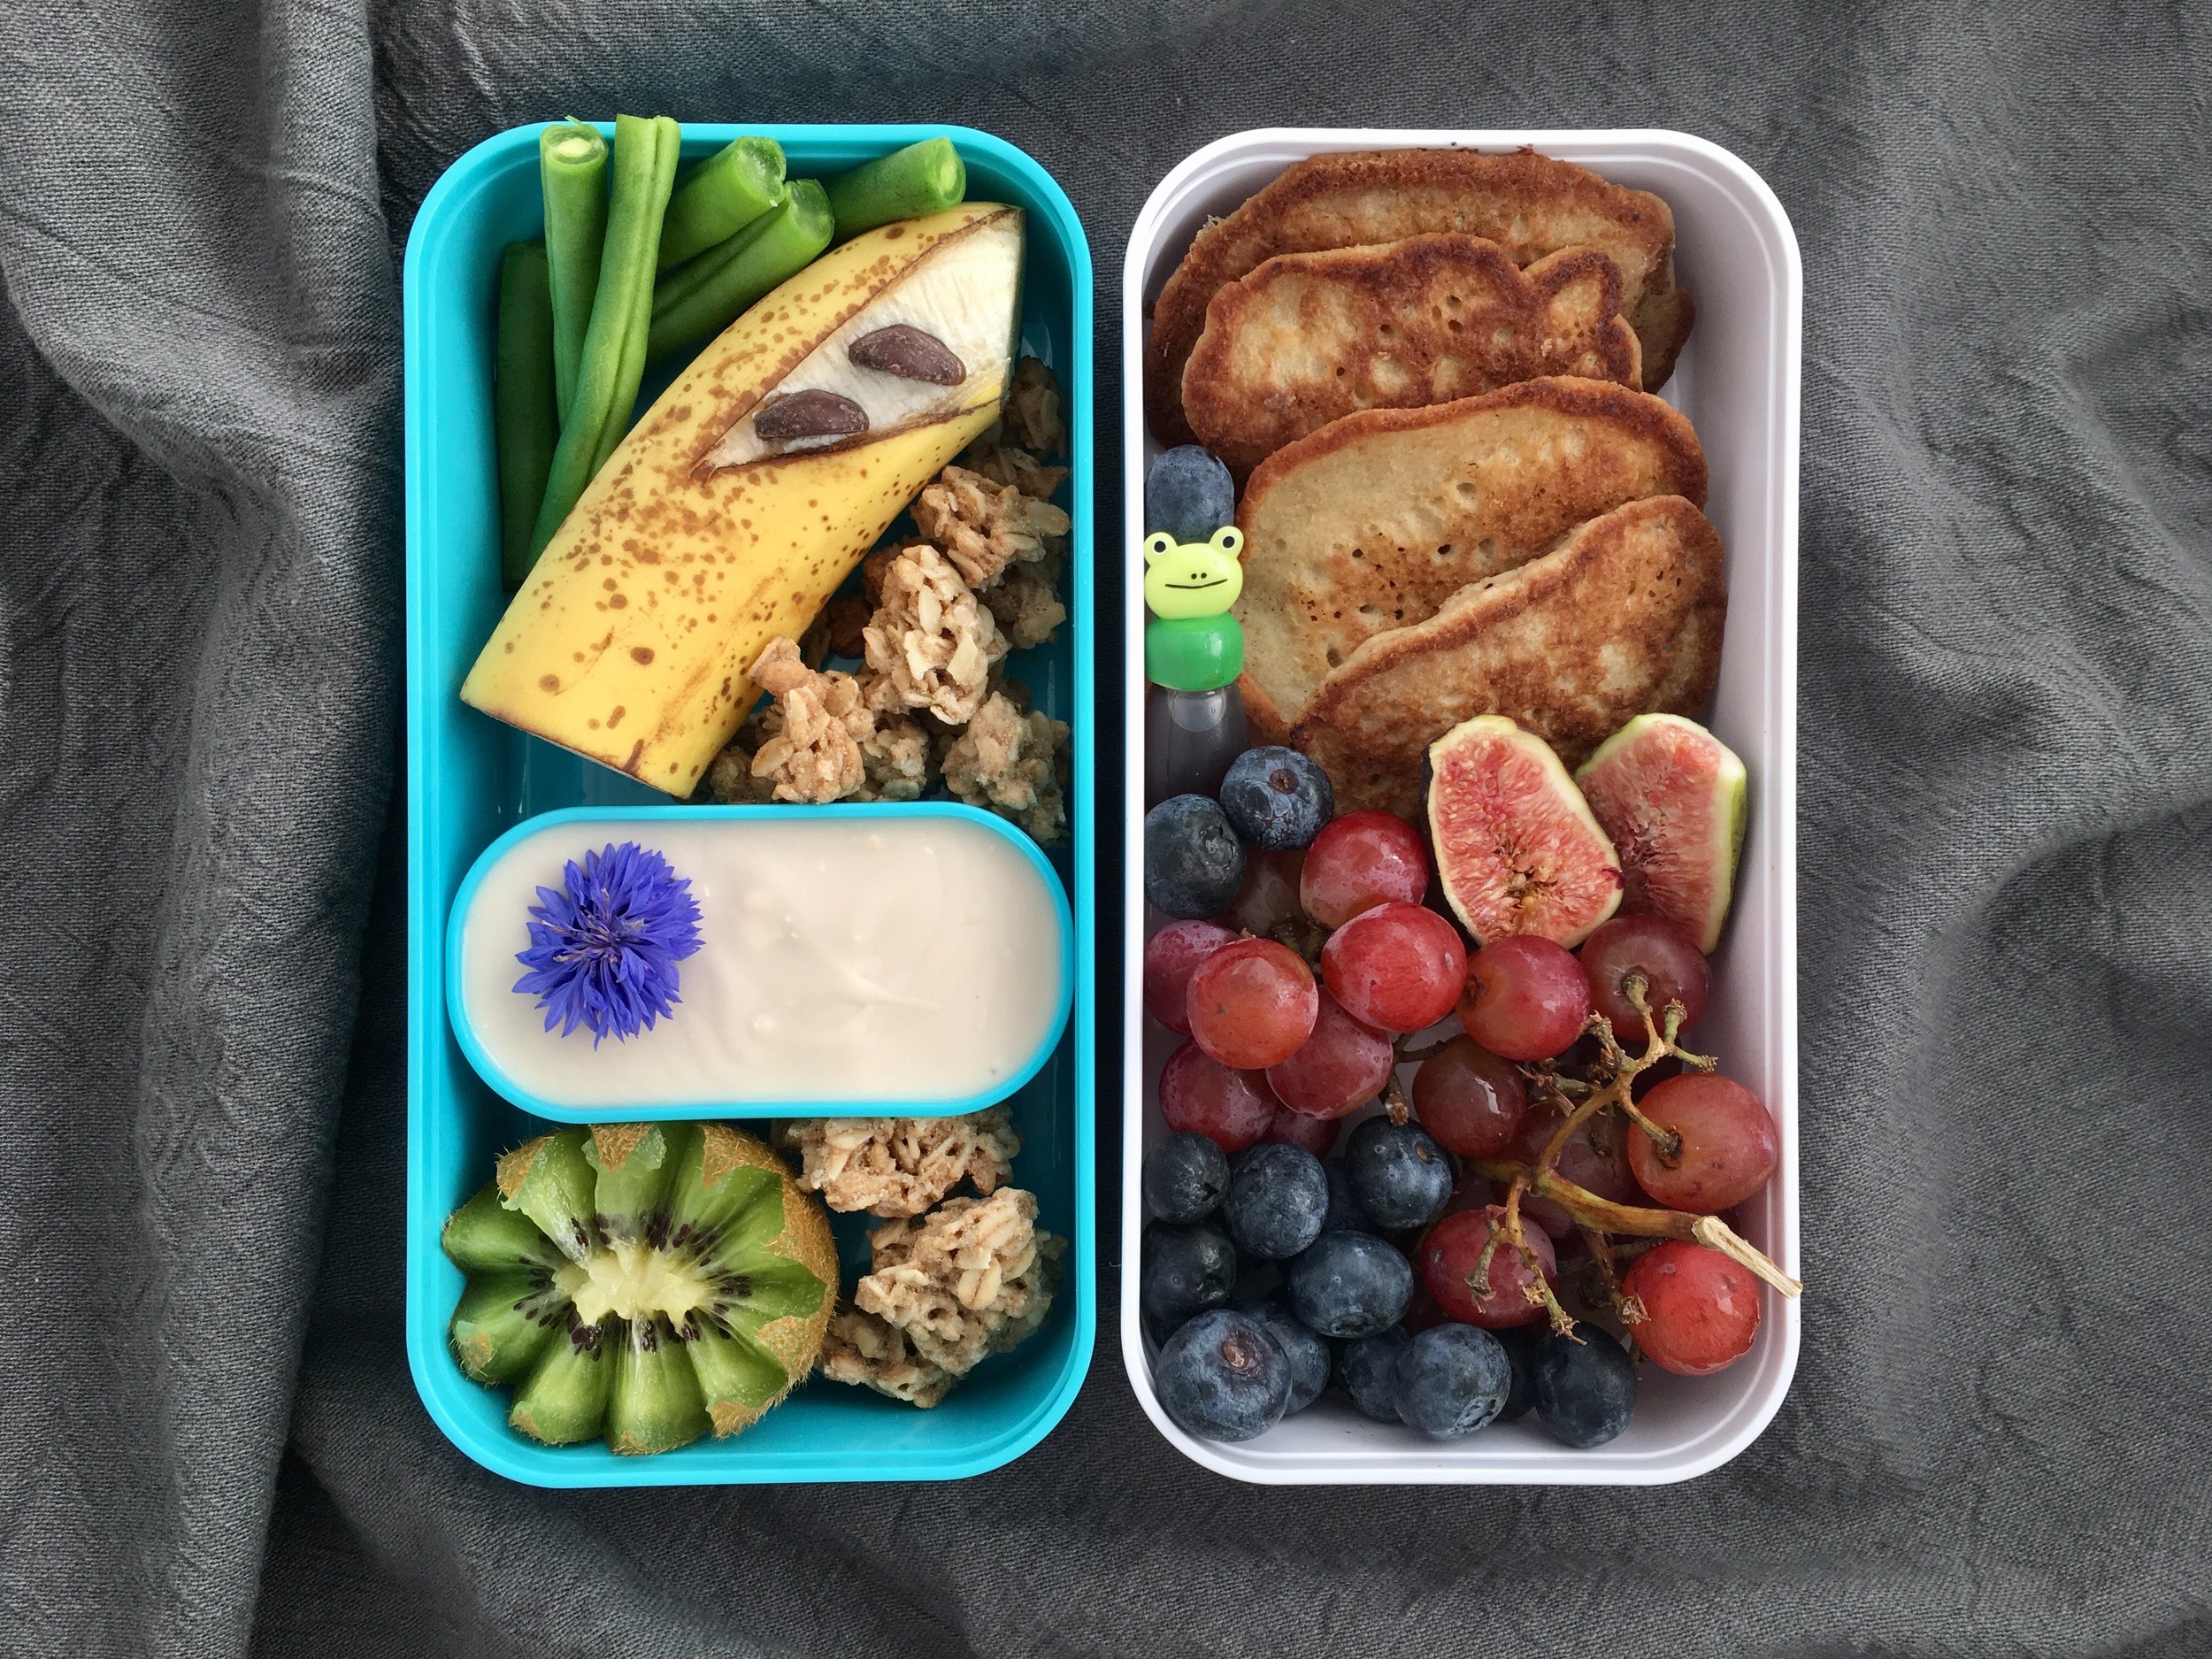 Favorite Lunch Box Accessories to Make Lunch Fun- Balancing Motherhood